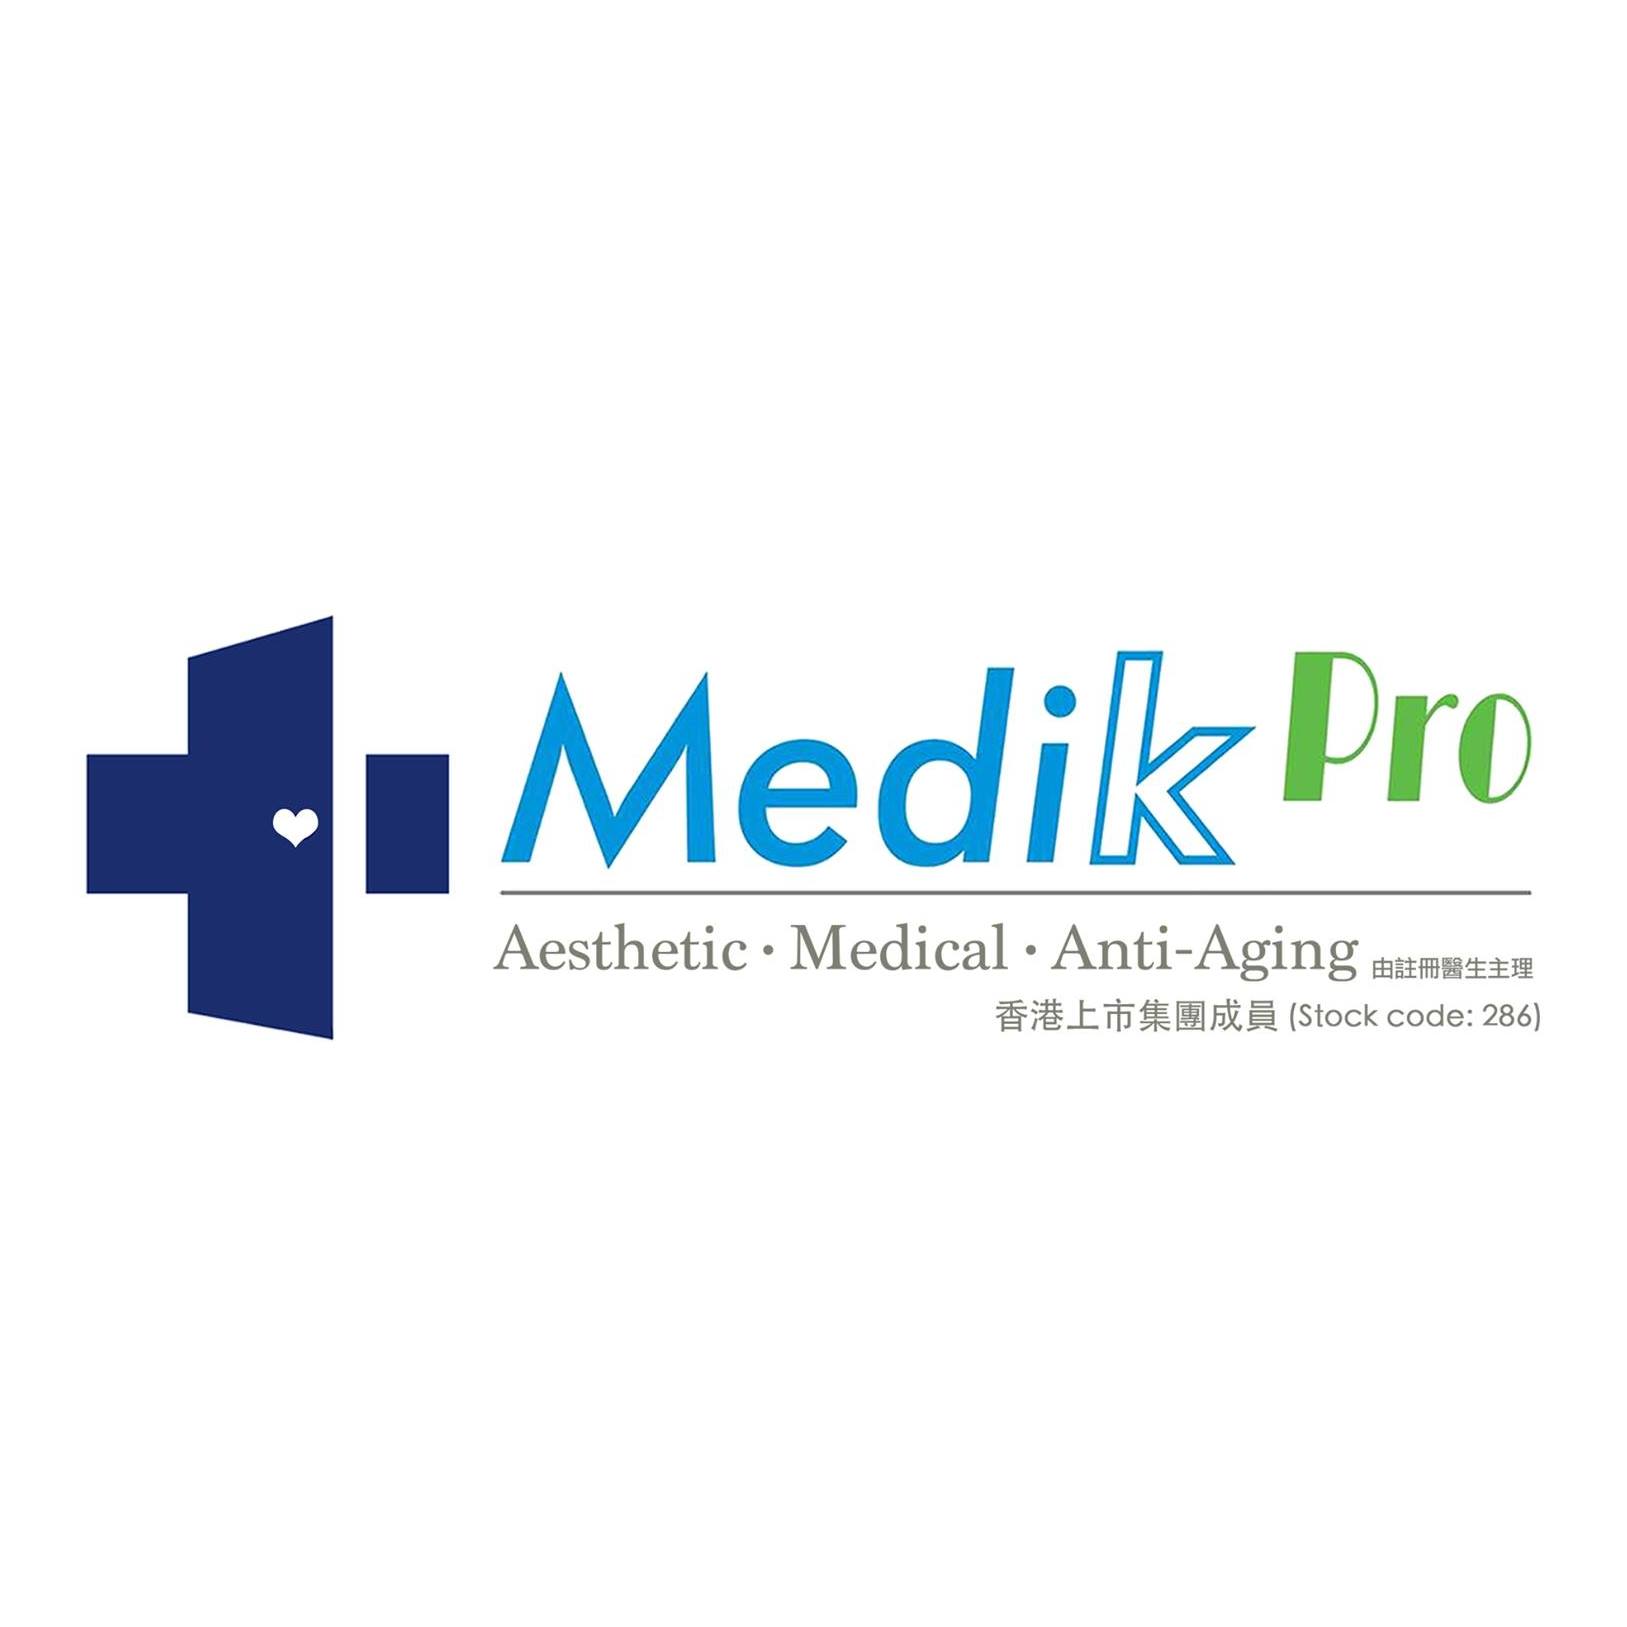 : Medik Pro (旺角分店)